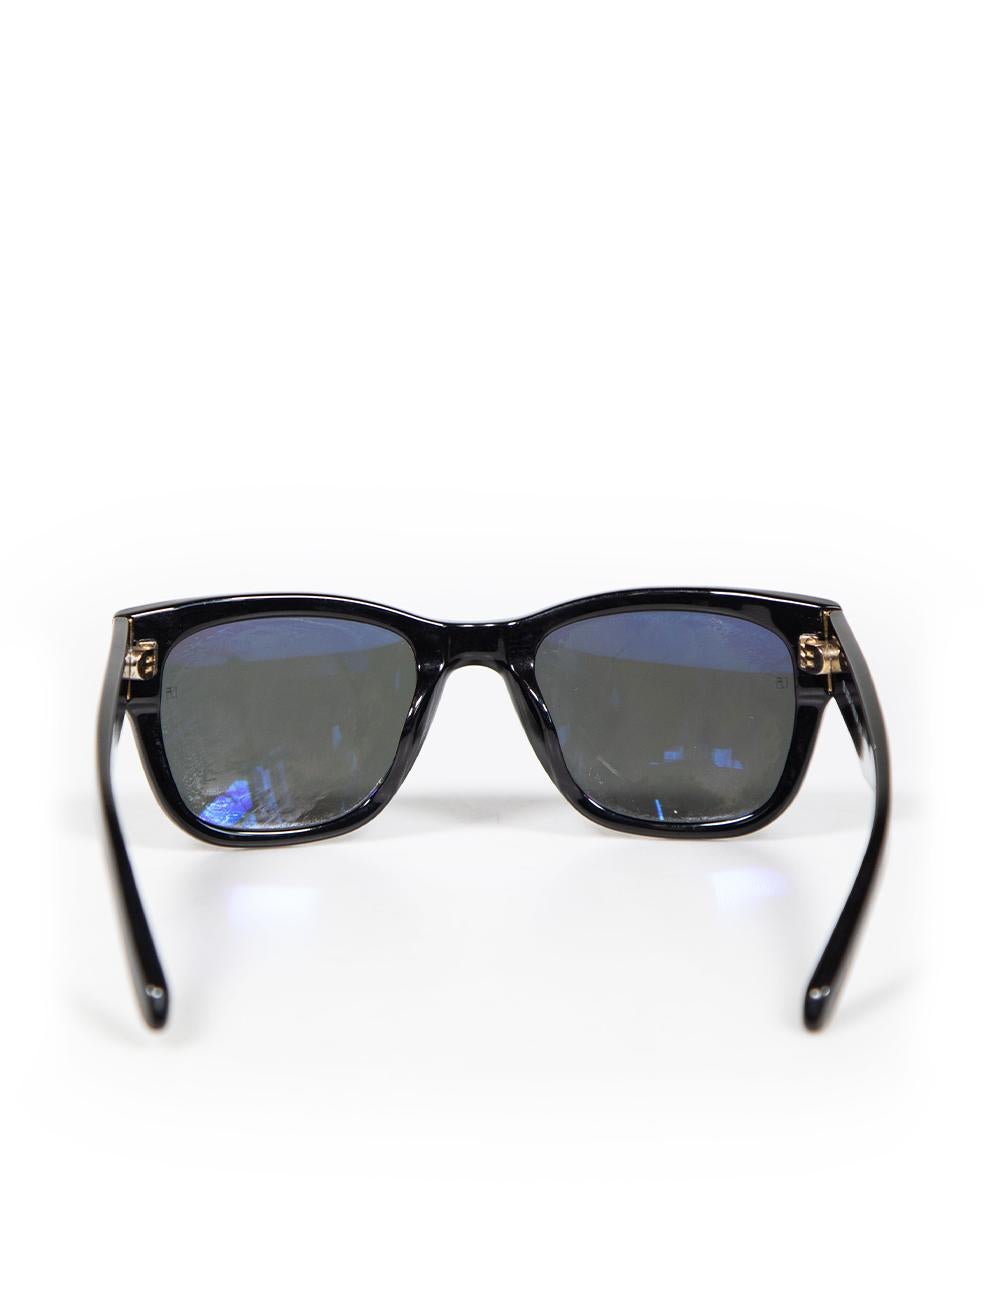 Linda Farrow Black Wayfarer Sunglasses In Excellent Condition For Sale In London, GB